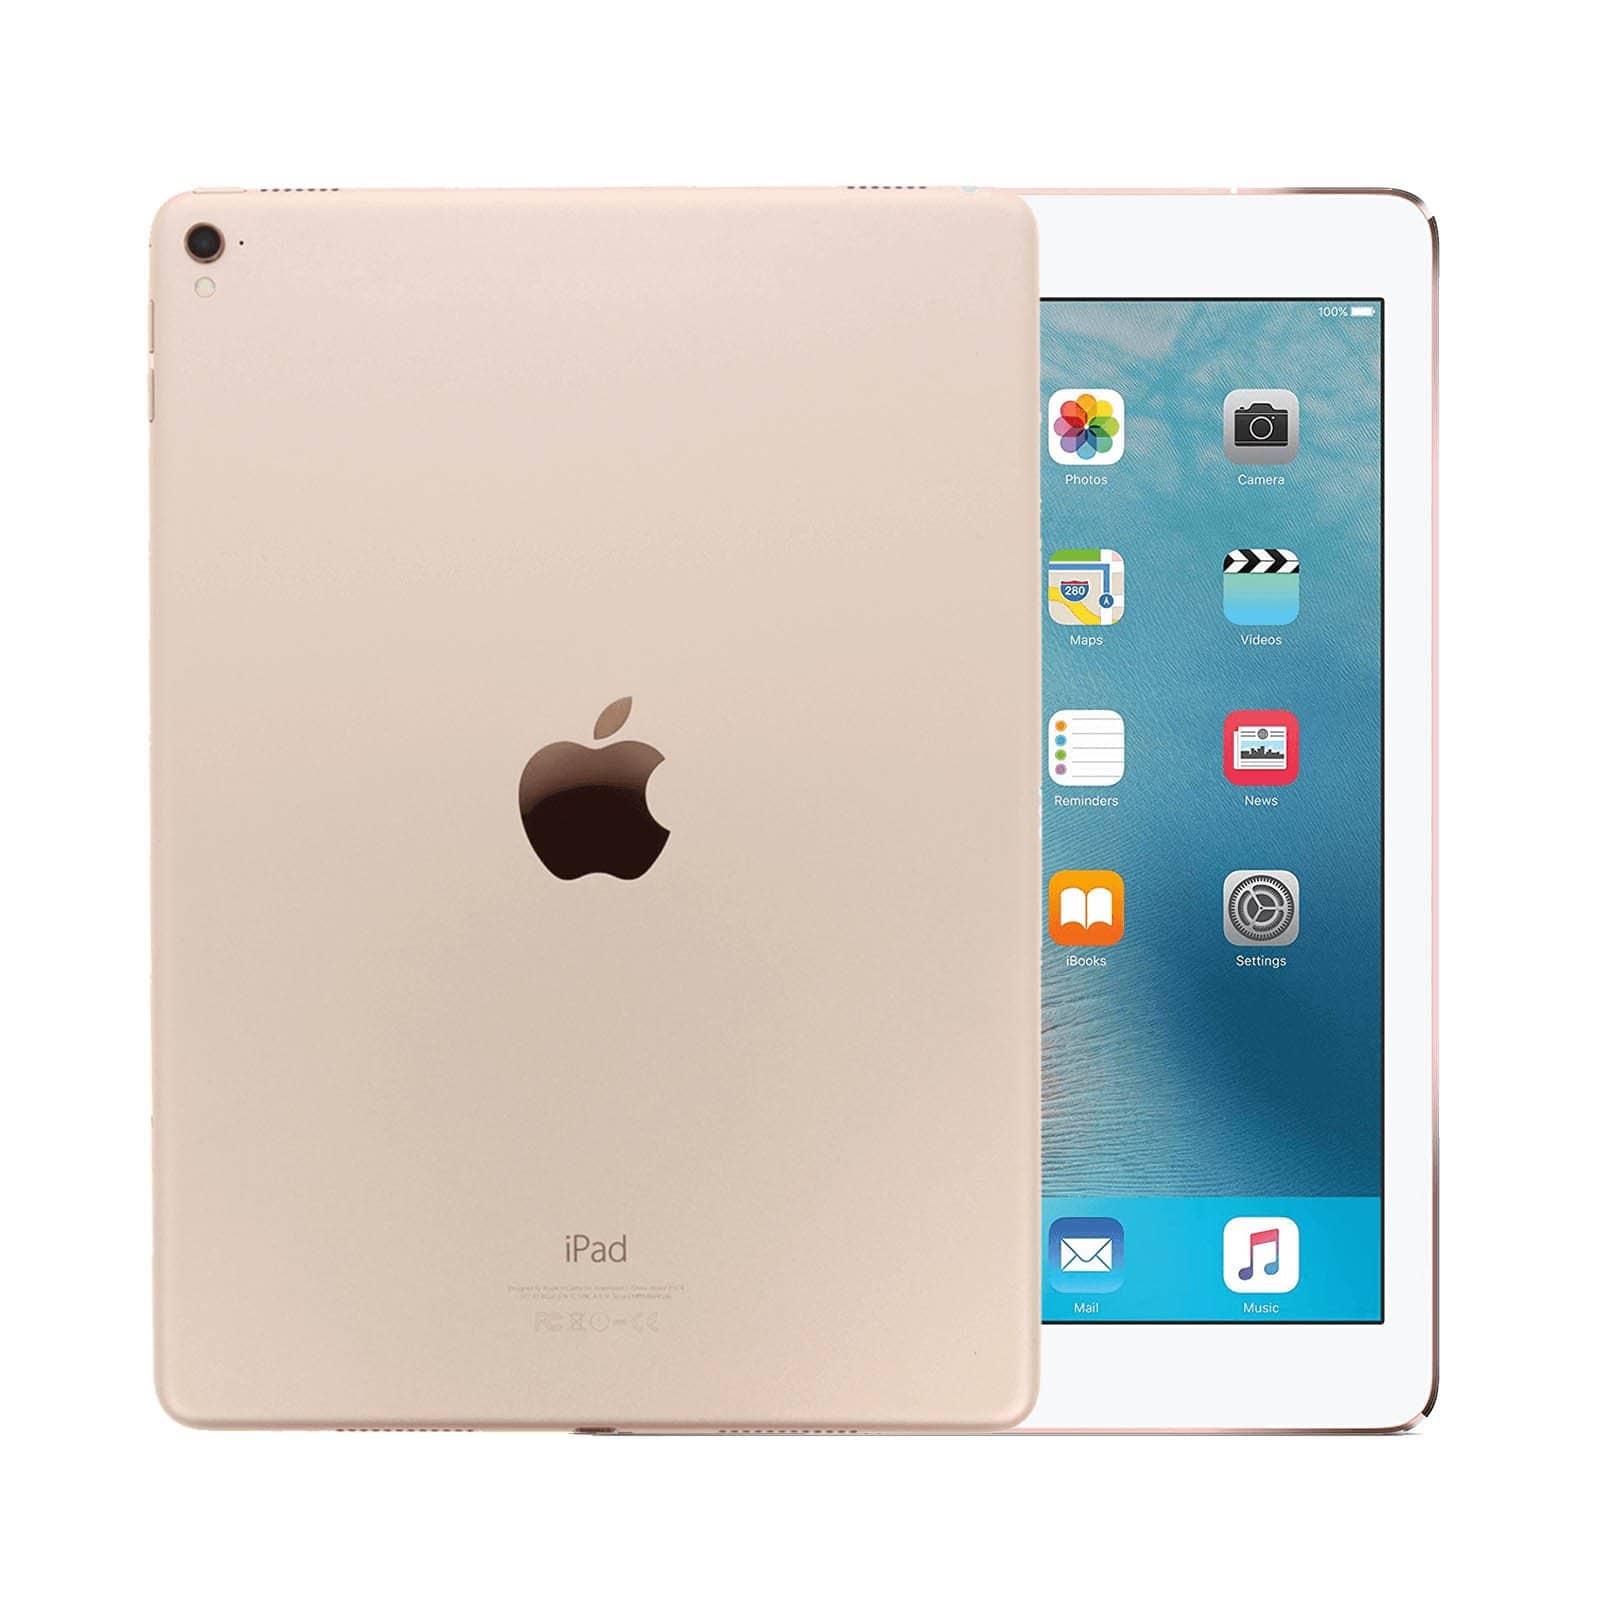 iPad Pro 9.7 Inch 256GB Gold Good - WiFi 256GB Gold Good